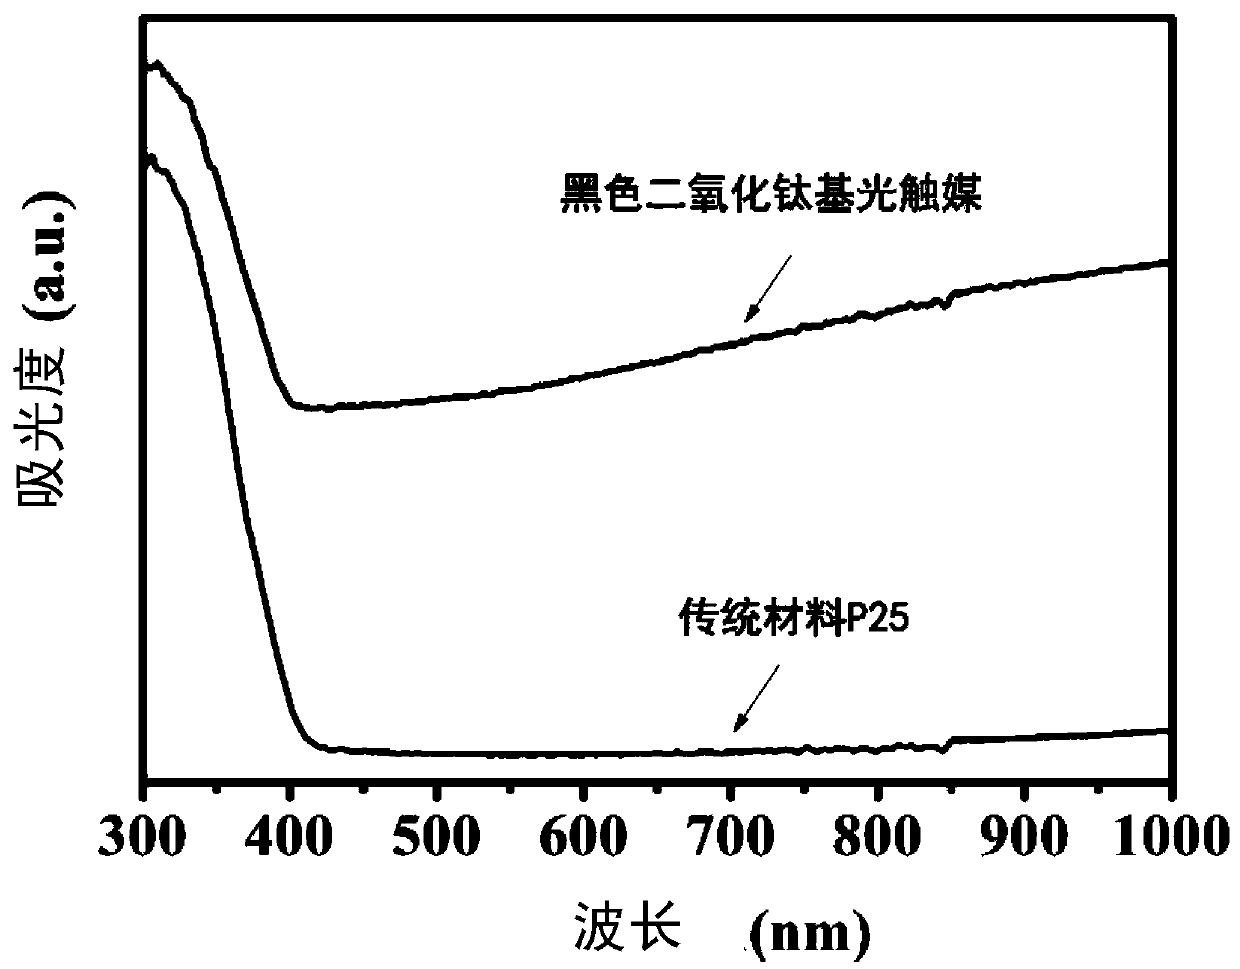 Efficient environment-friendly black titanium dioxide-based photocatalyst and preparation method thereof